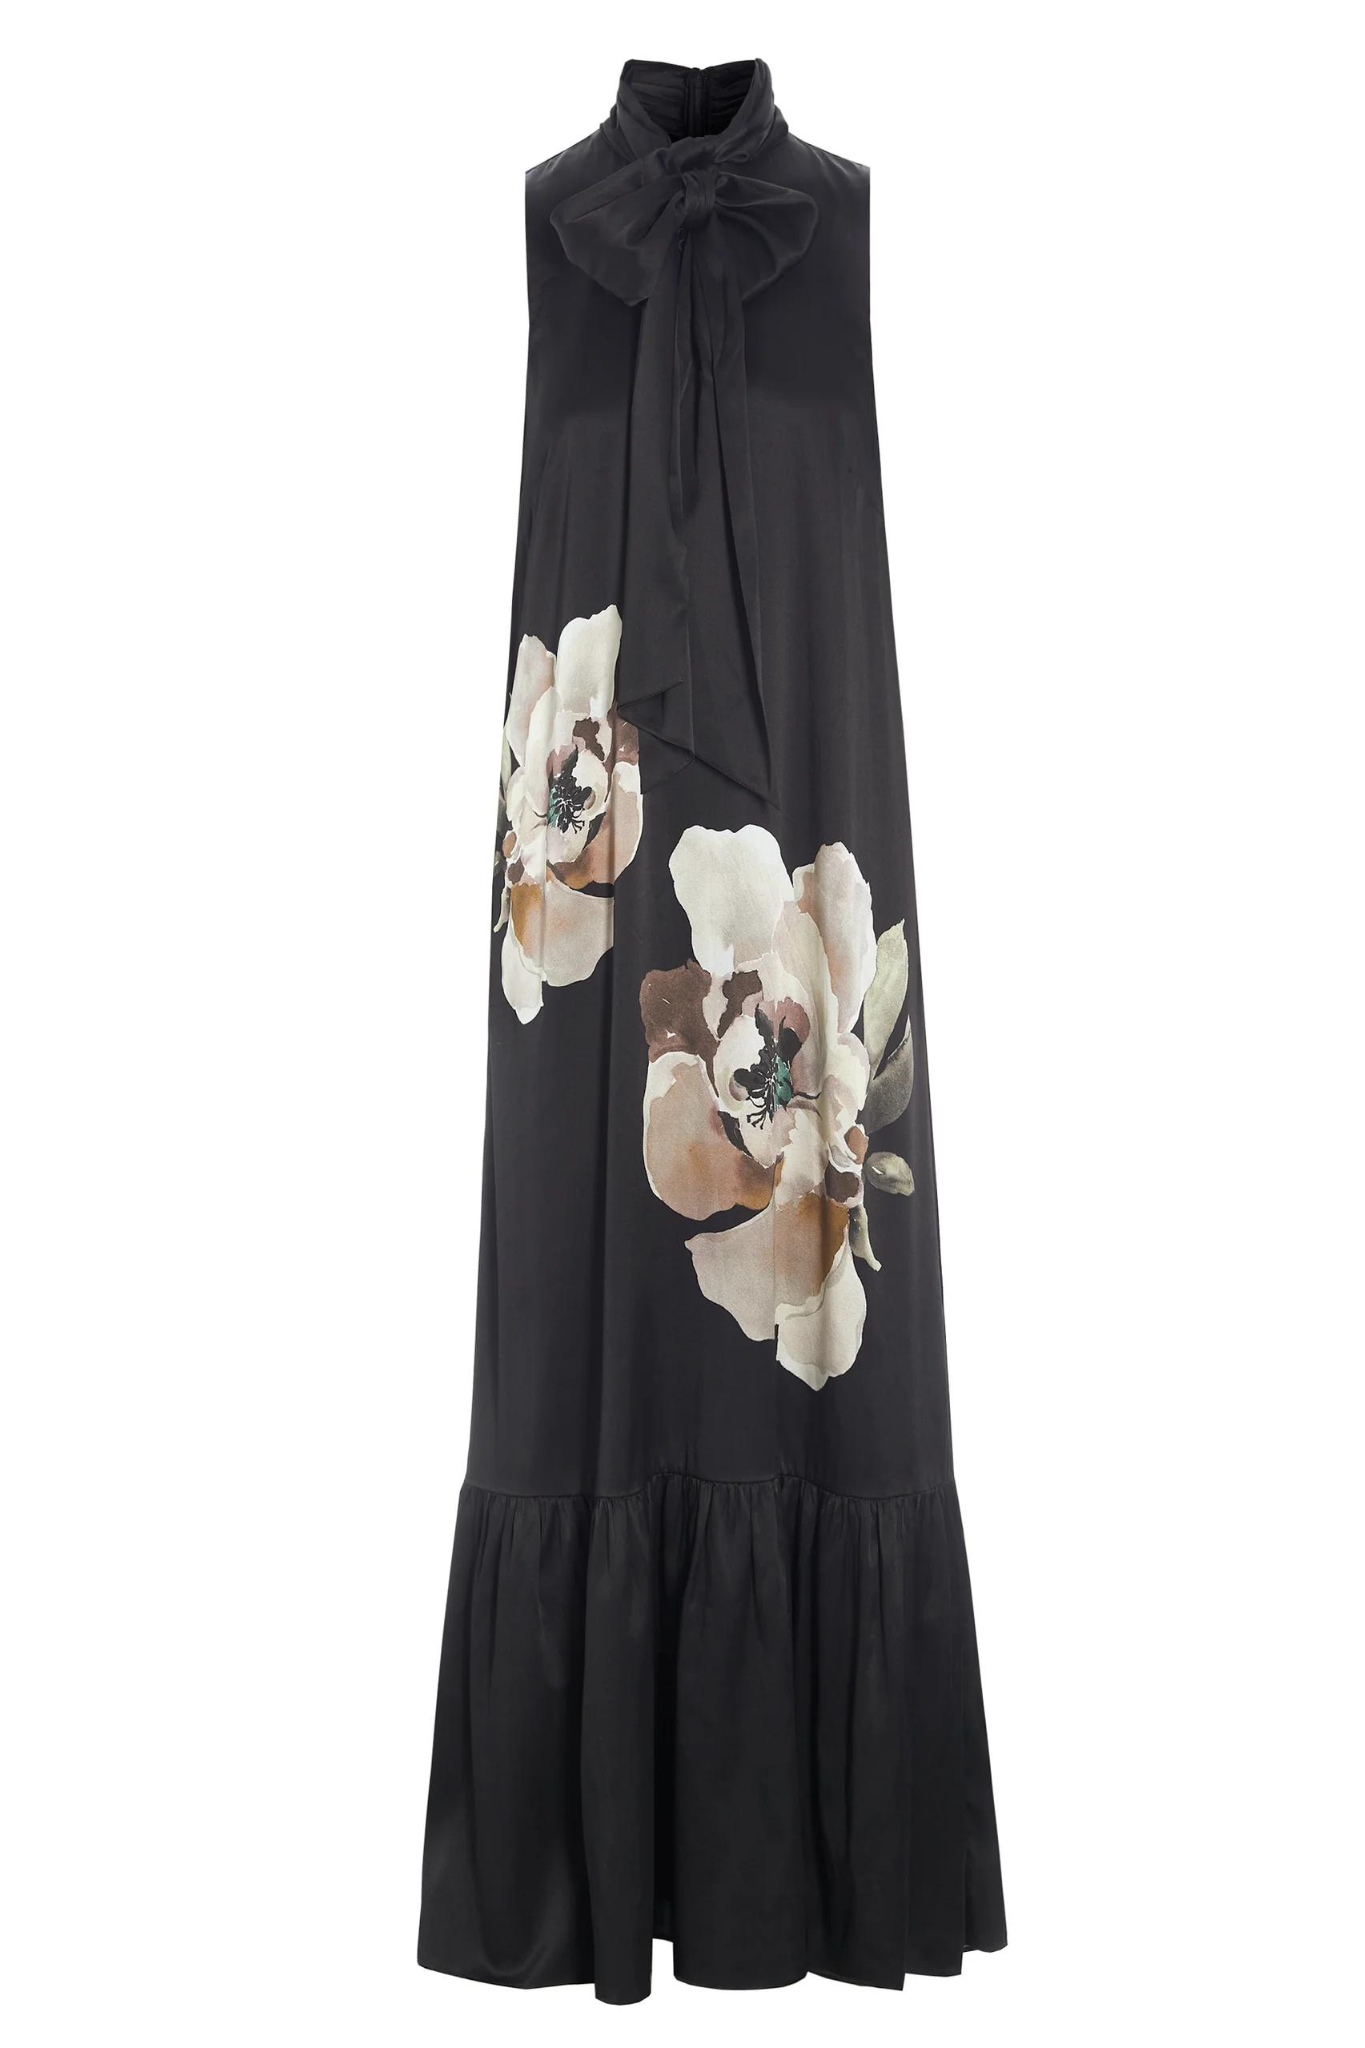 Shop Peonia Black Sleeveless Dress at Jessimara.com